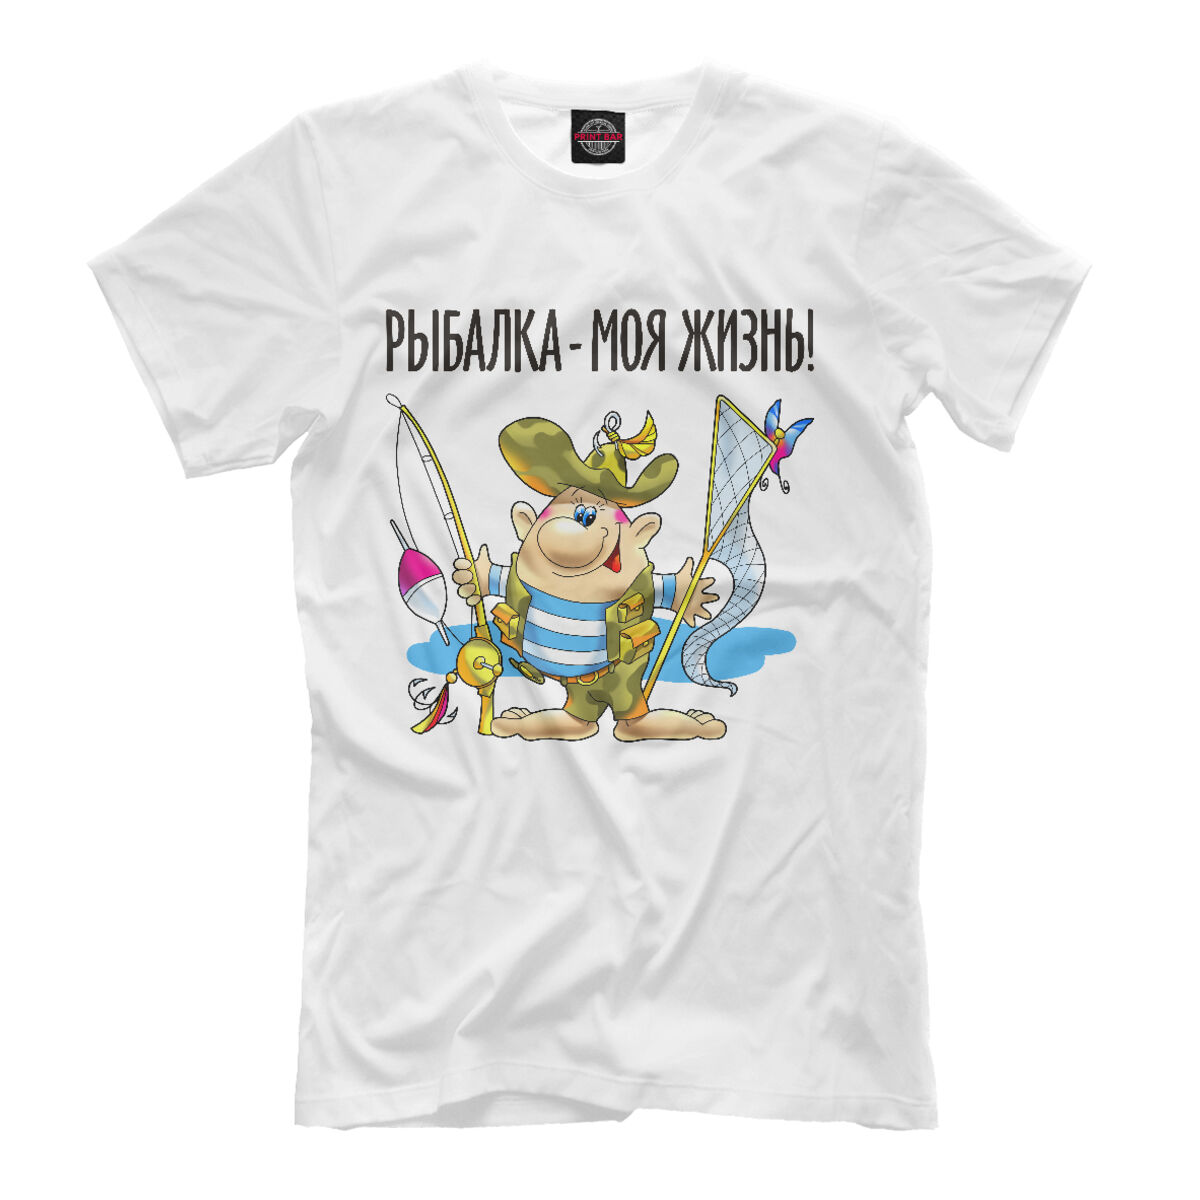 Принт на футболку для рыбака